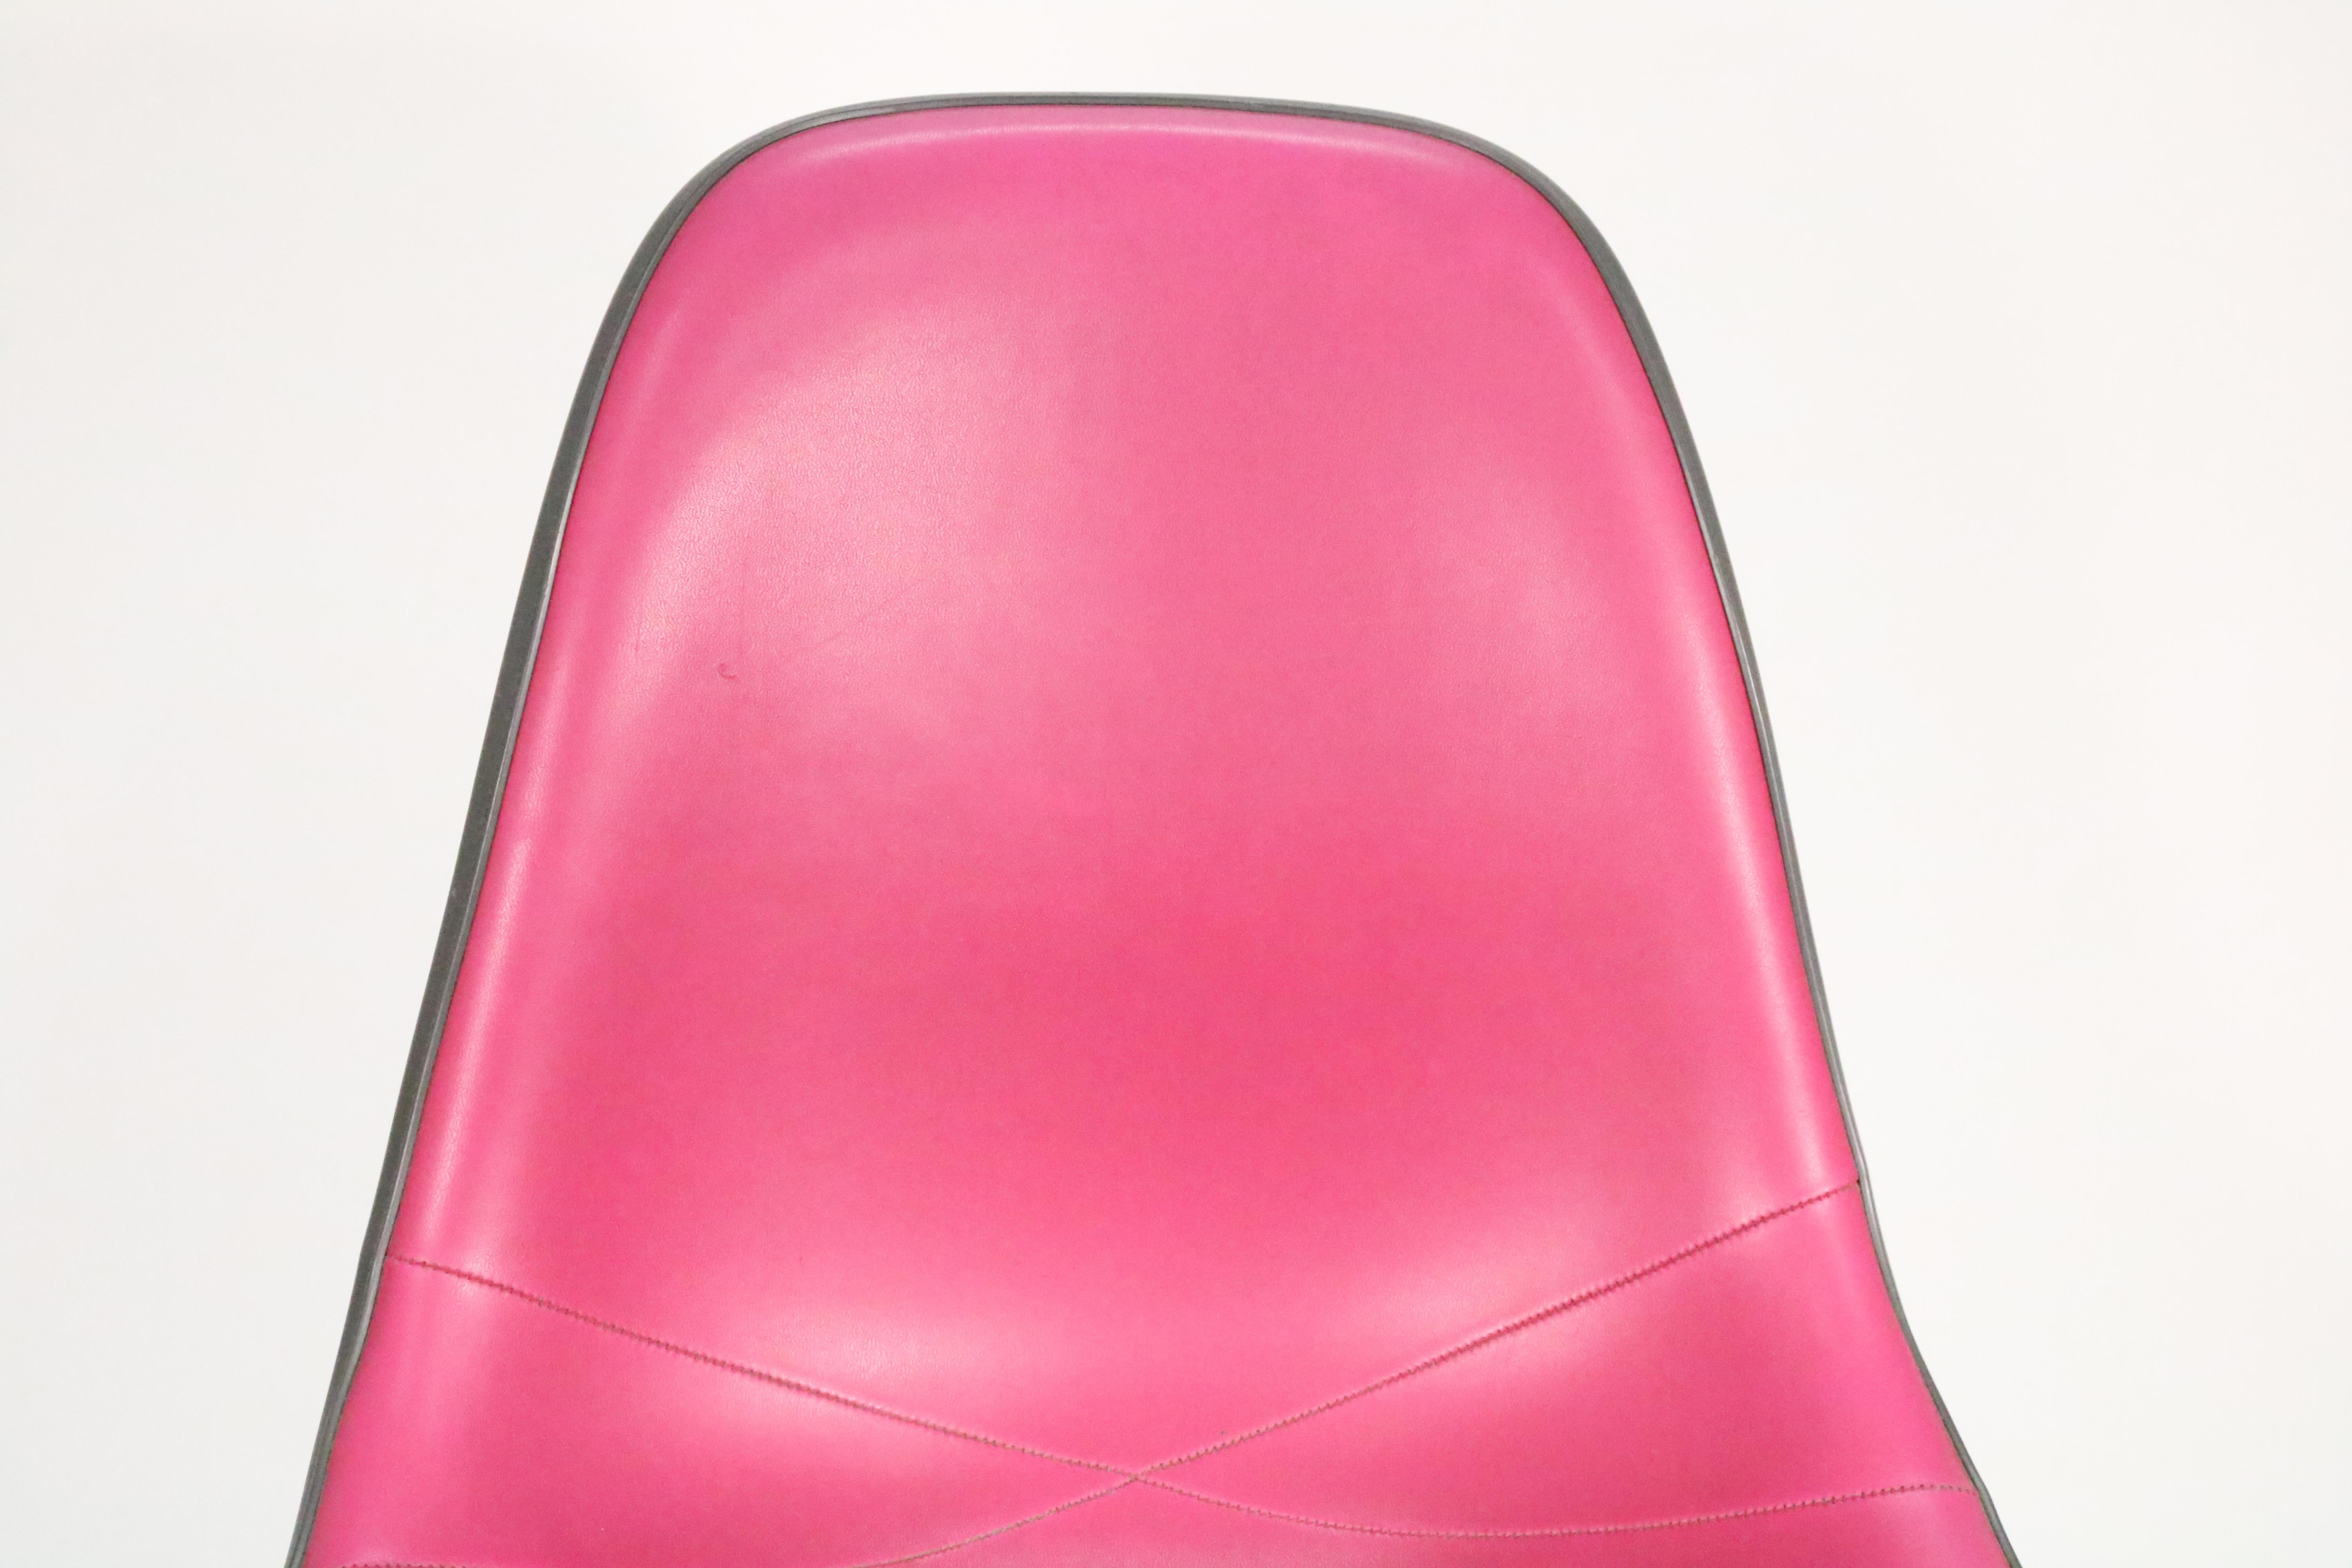 Molded Eames for Herman Miller Fiberglass Shell in Bright Pink Vinyl on Stackable Base